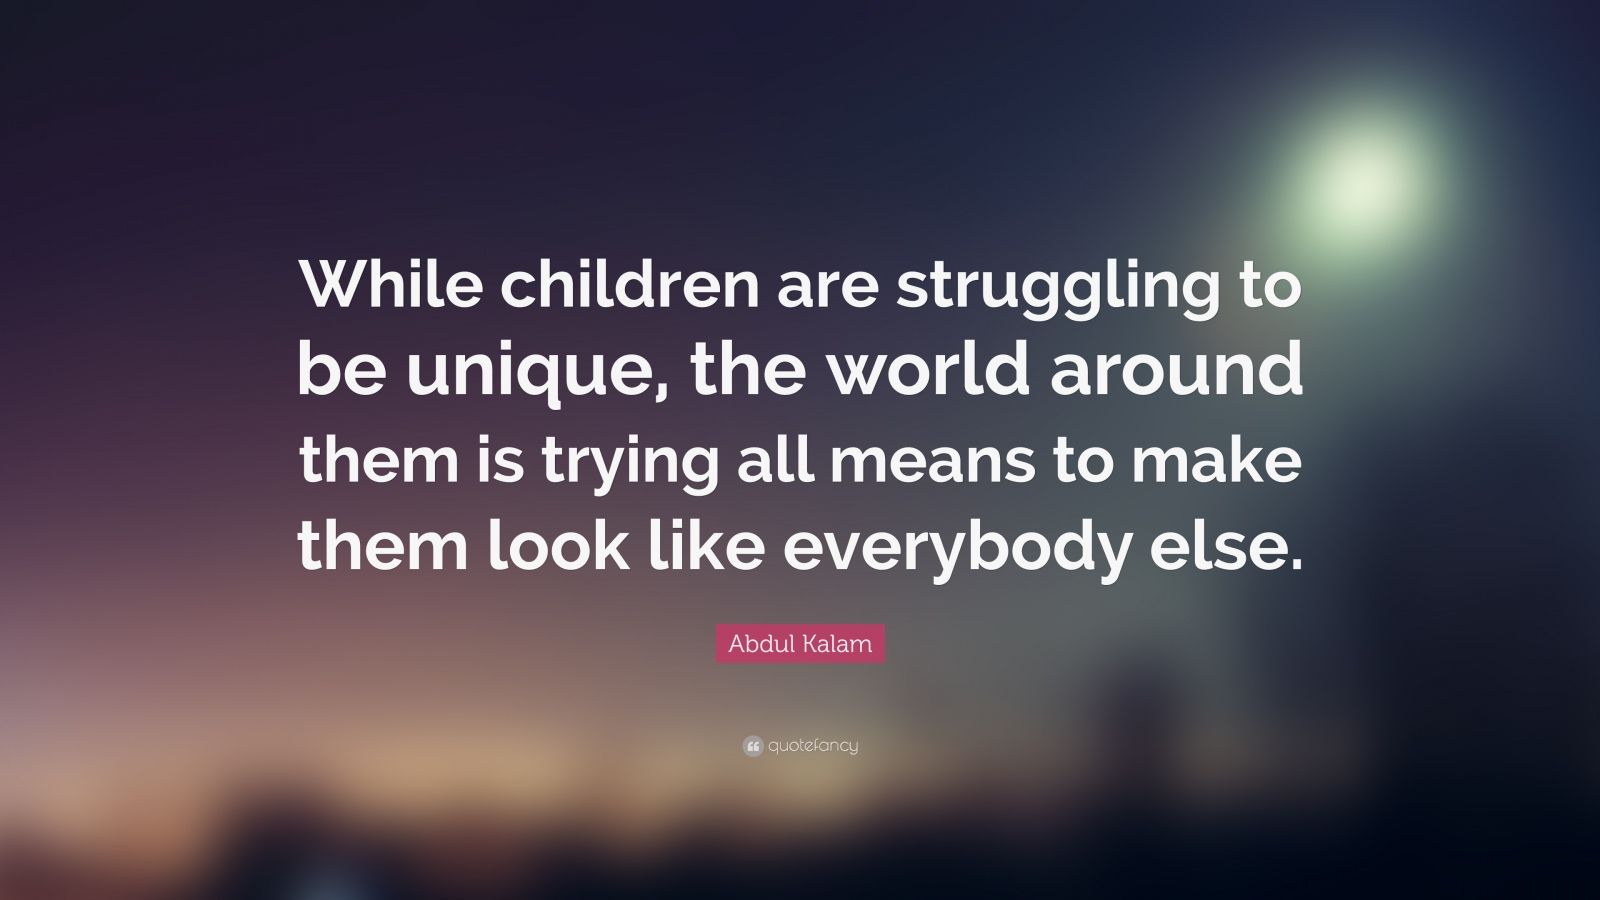 Abdul Kalam Quote “While children are struggling to be unique the world around